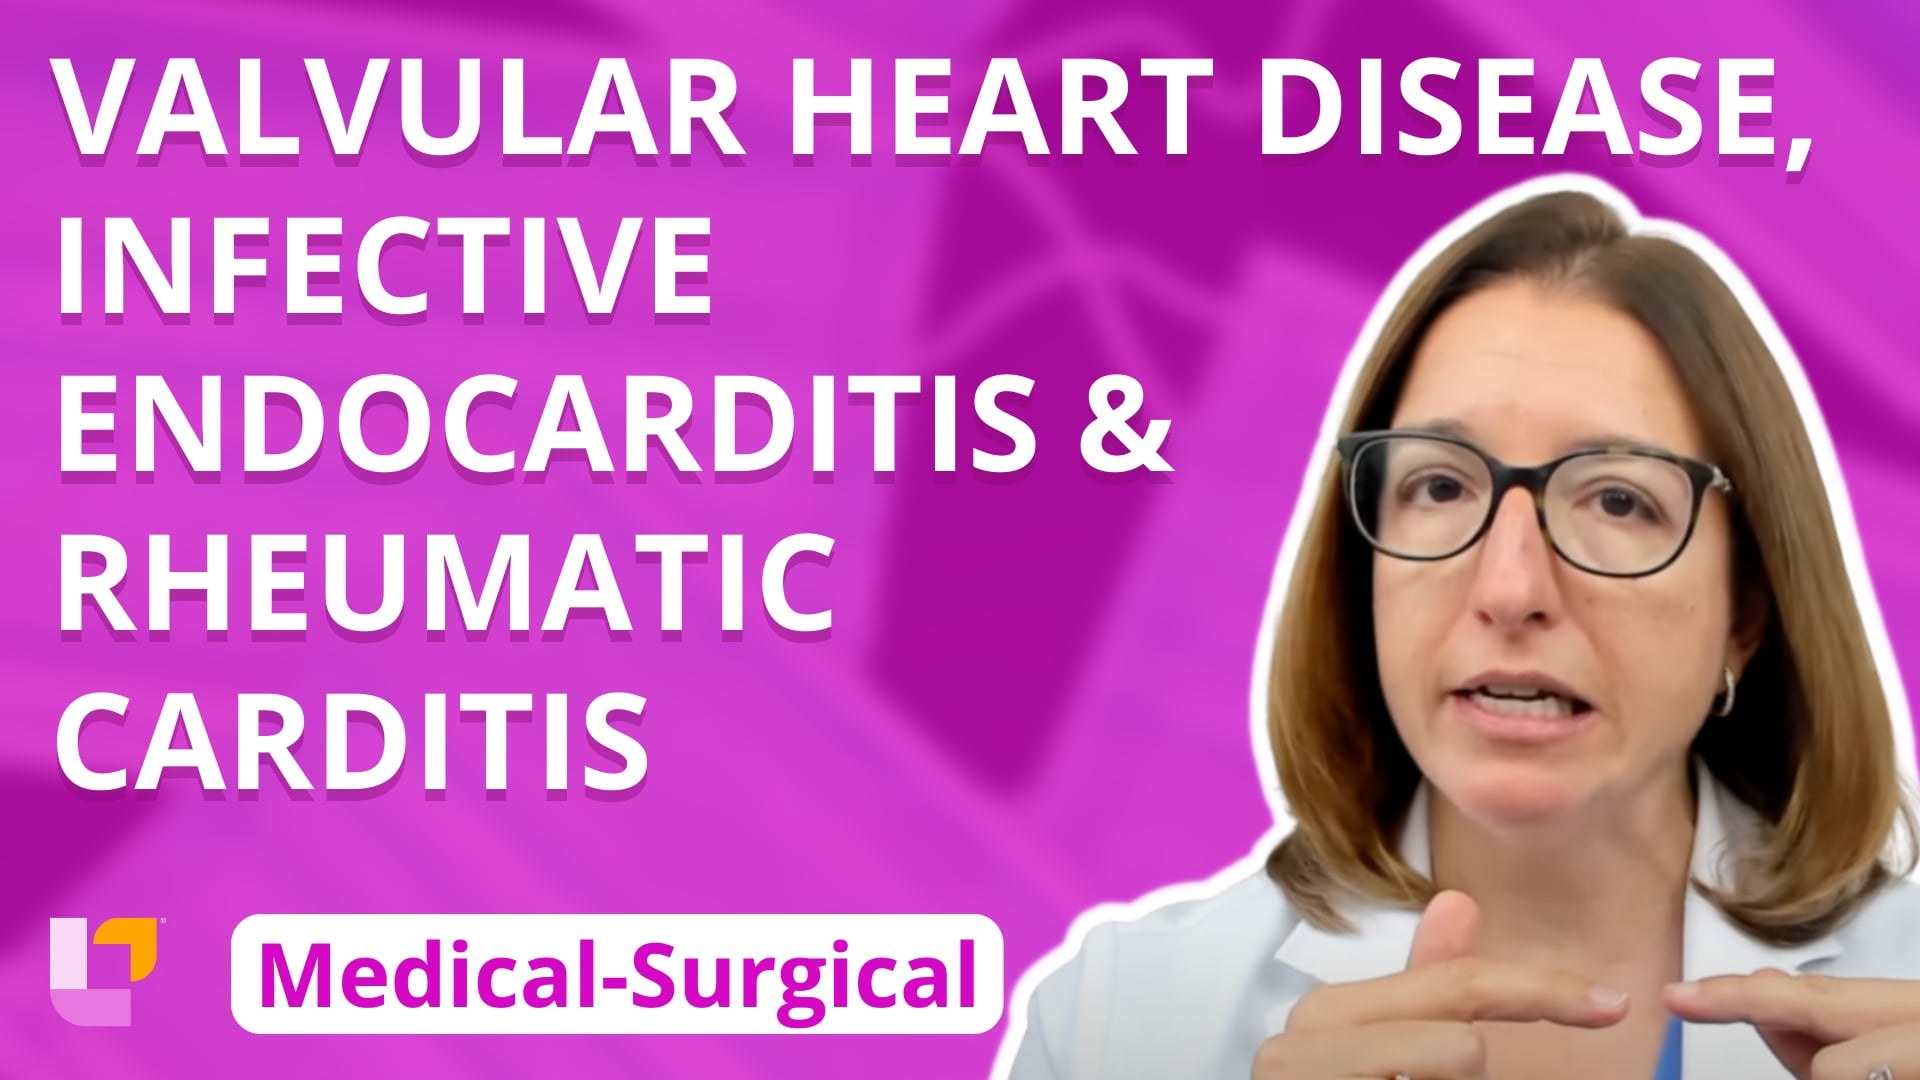 Med-Surg - Cardiovascular System, part 9: Valvular Heart Disease, Infective Endocarditis, Rheumatic Carditis - LevelUpRN